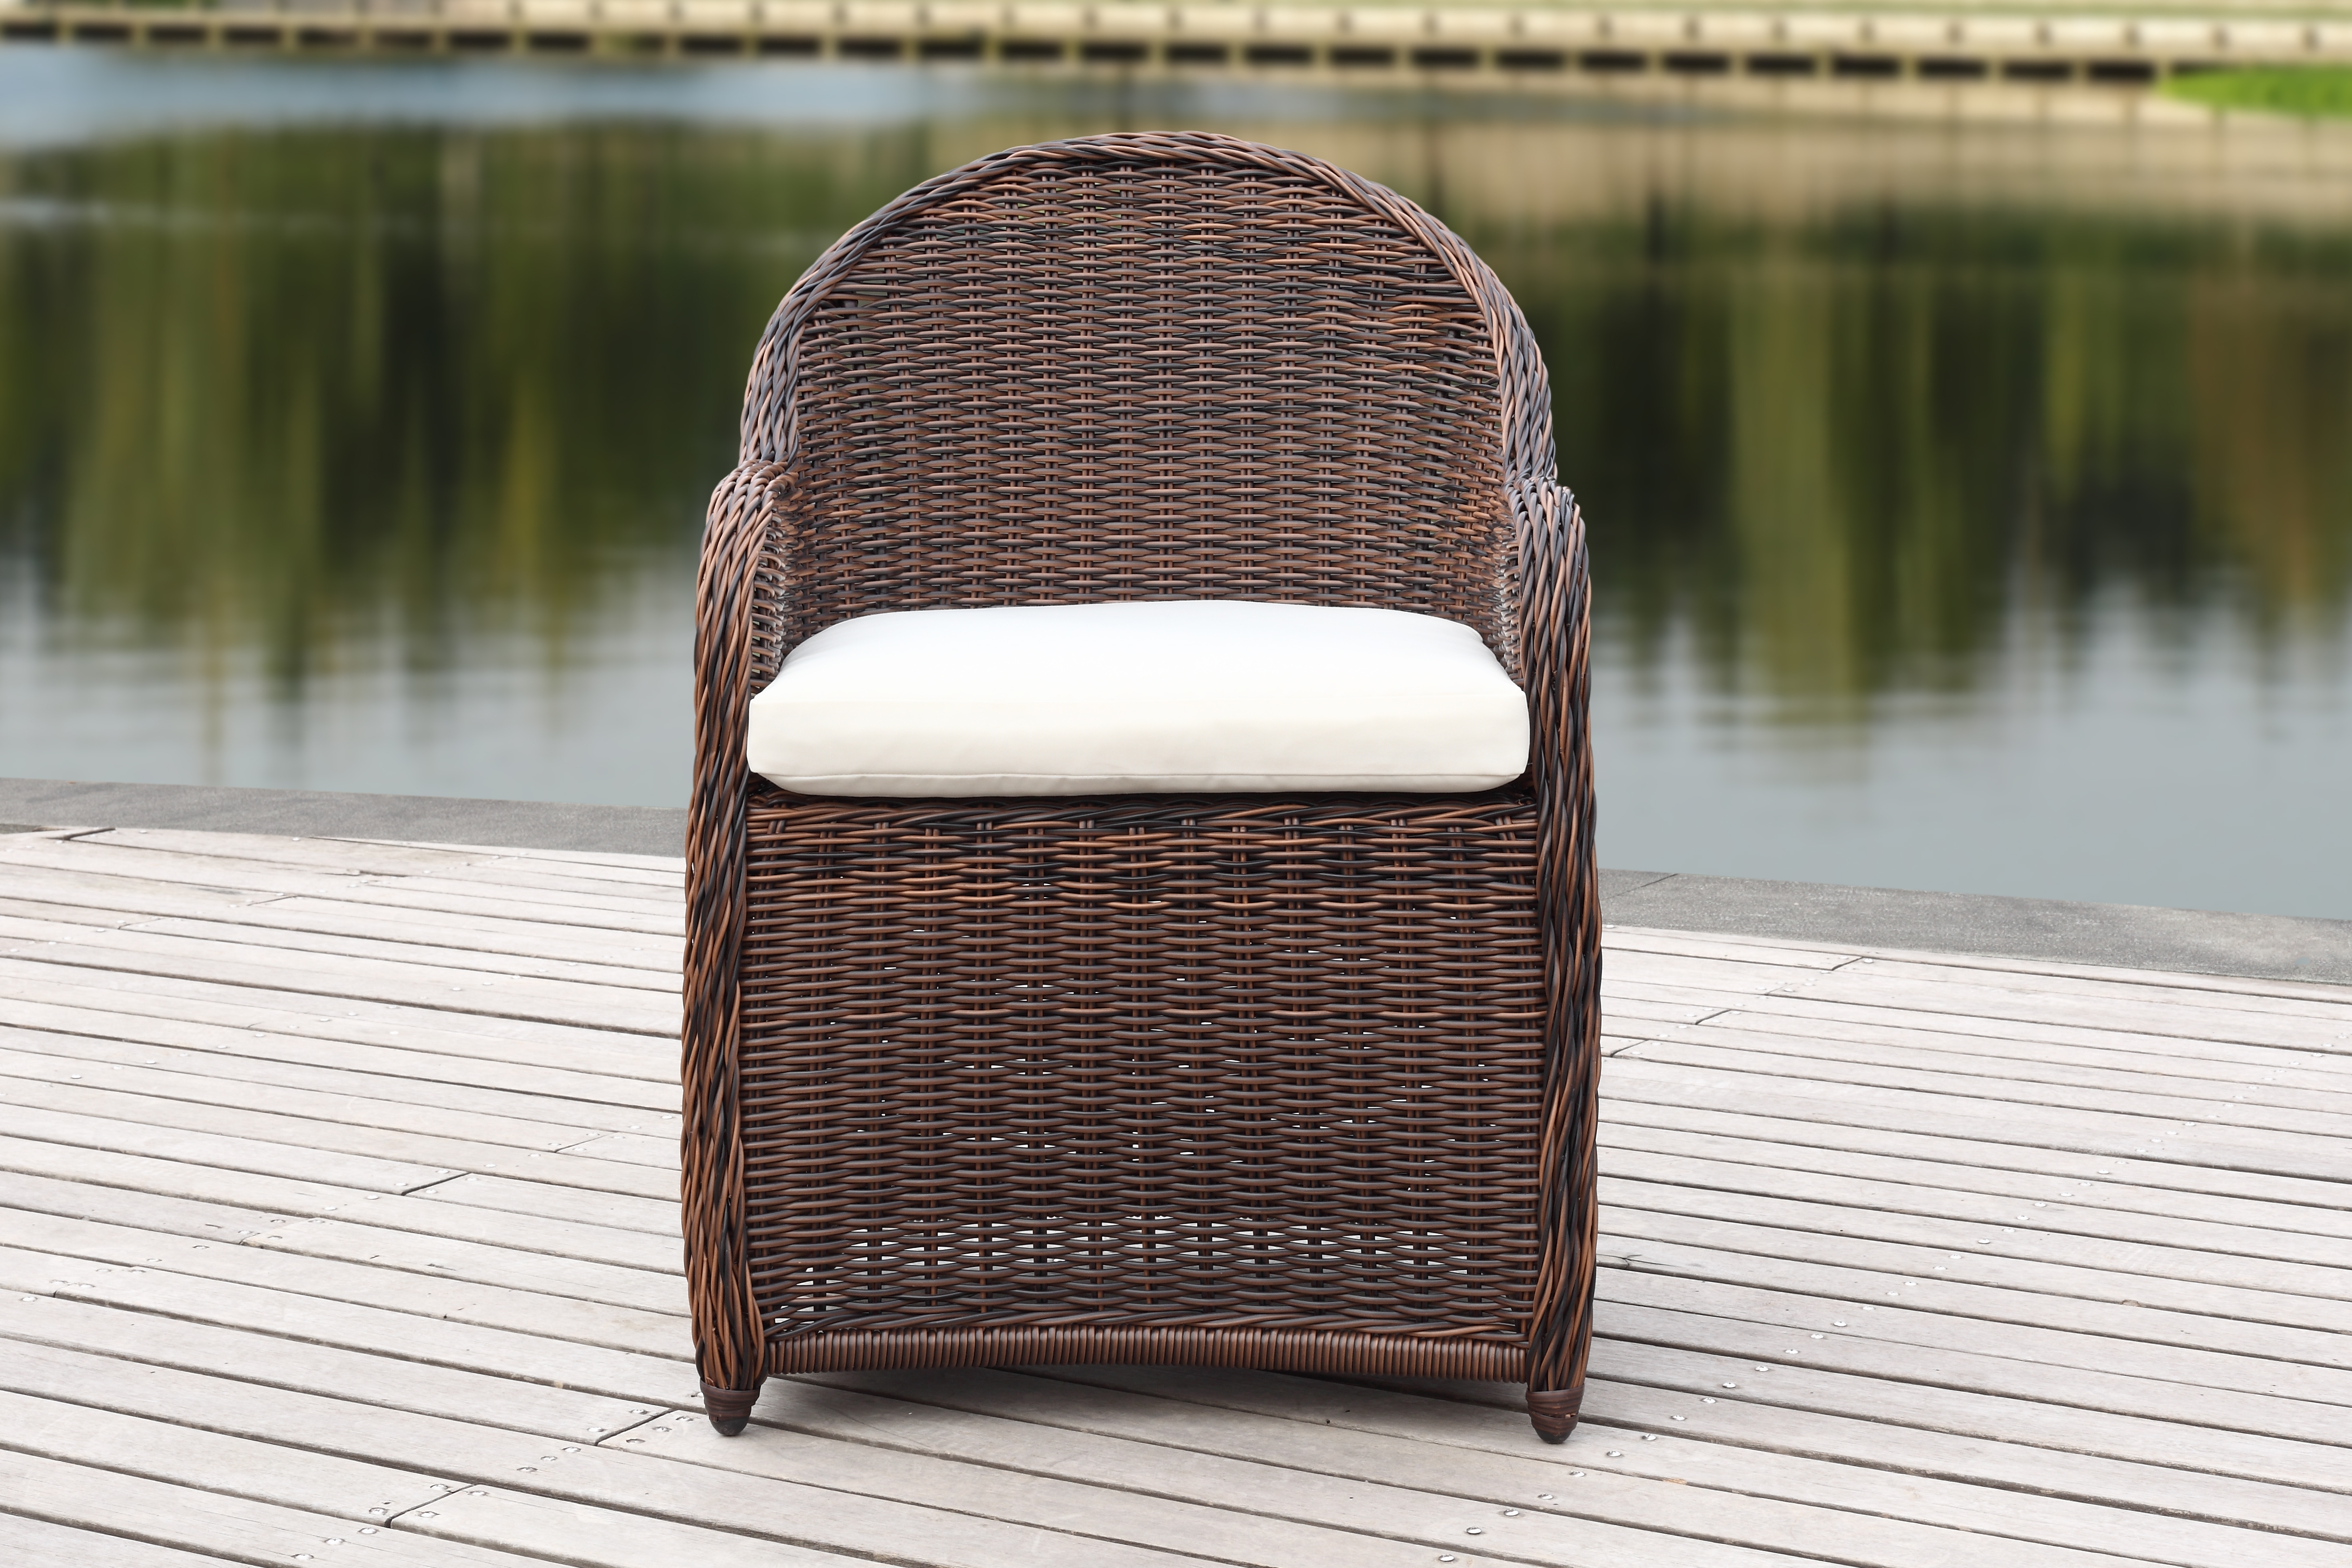 Newton Wicker Arm Chair With Cushion - Brown/Beige - Safavieh - Image 9